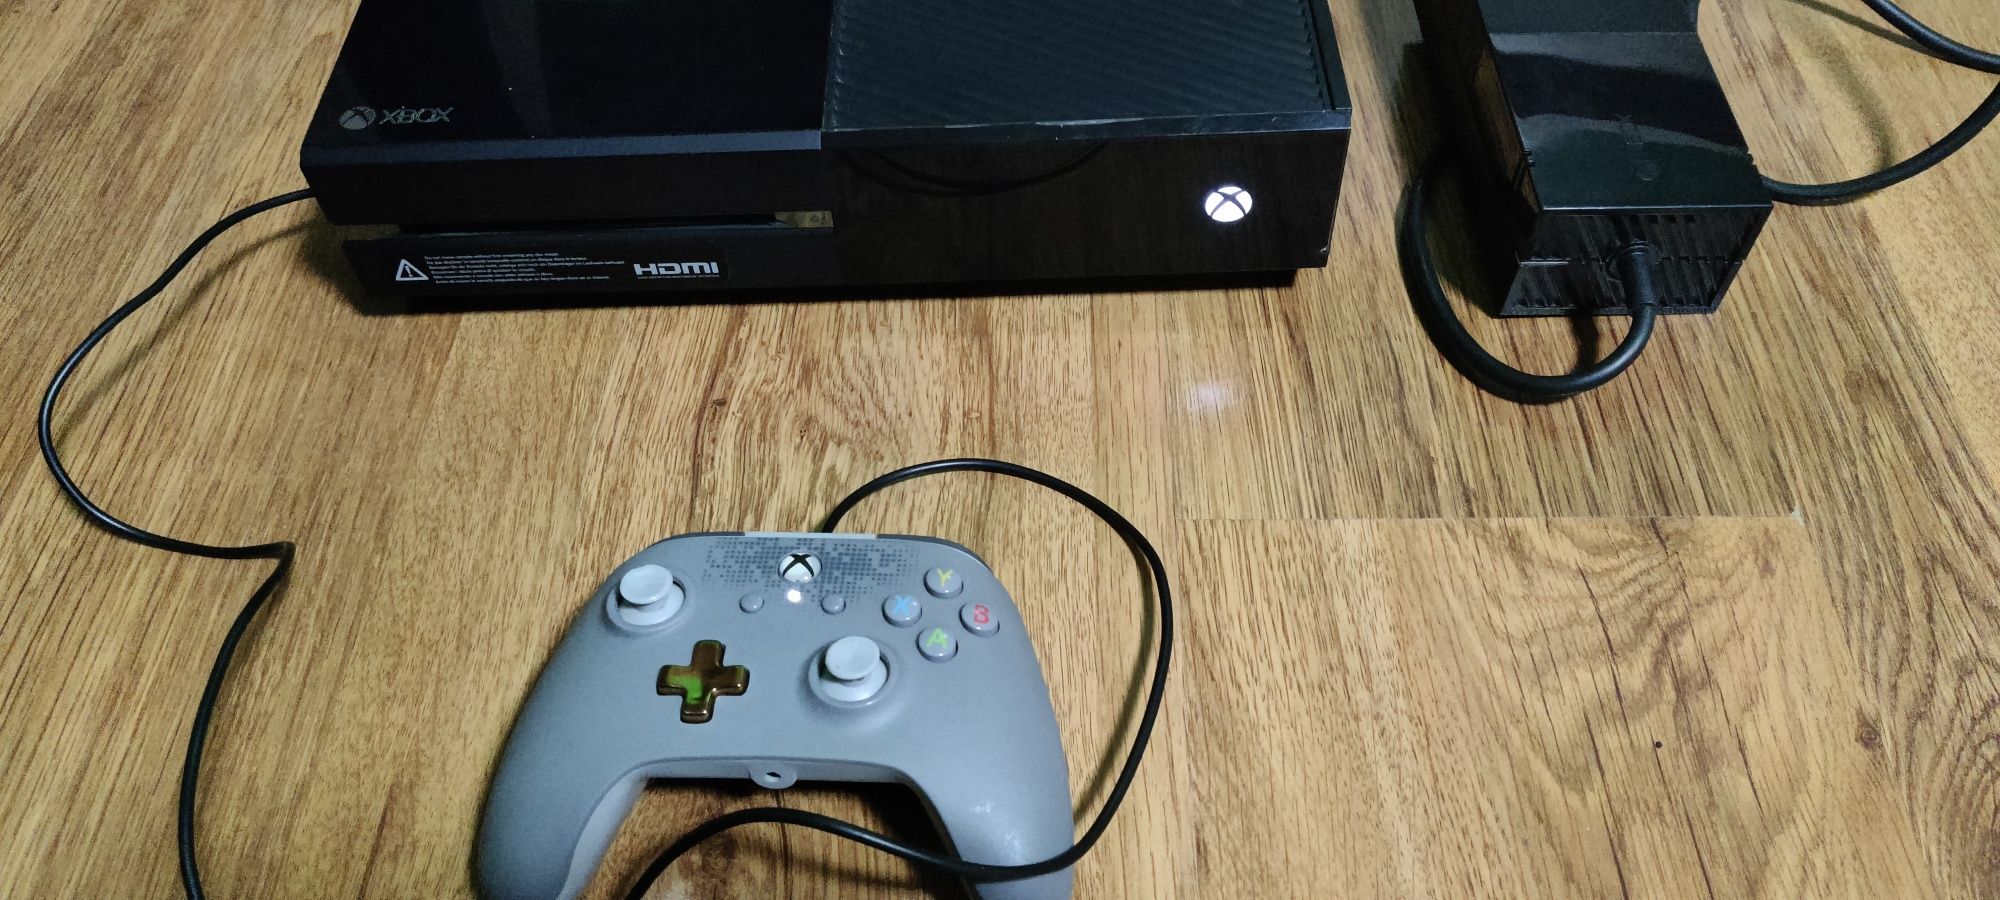 Xbox one Phat 500g